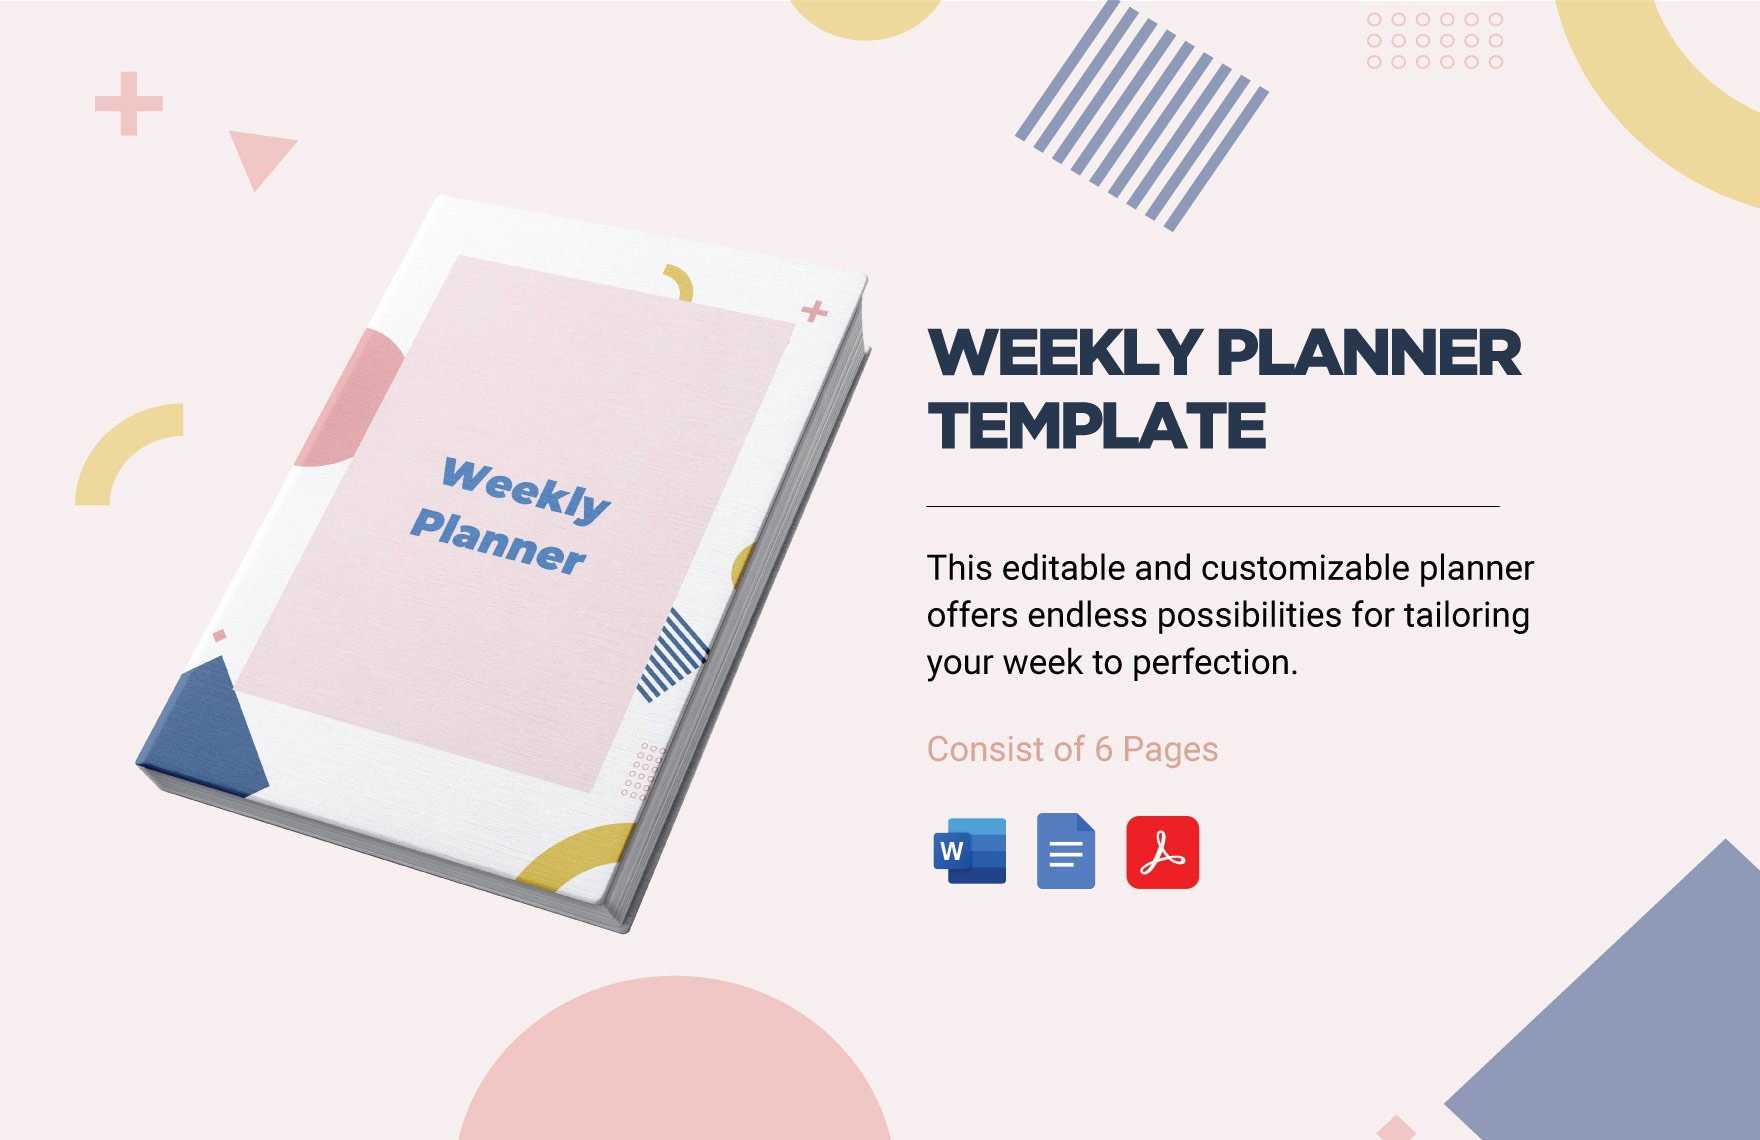 Weekly Planner Template in Word, Google Docs, PDF